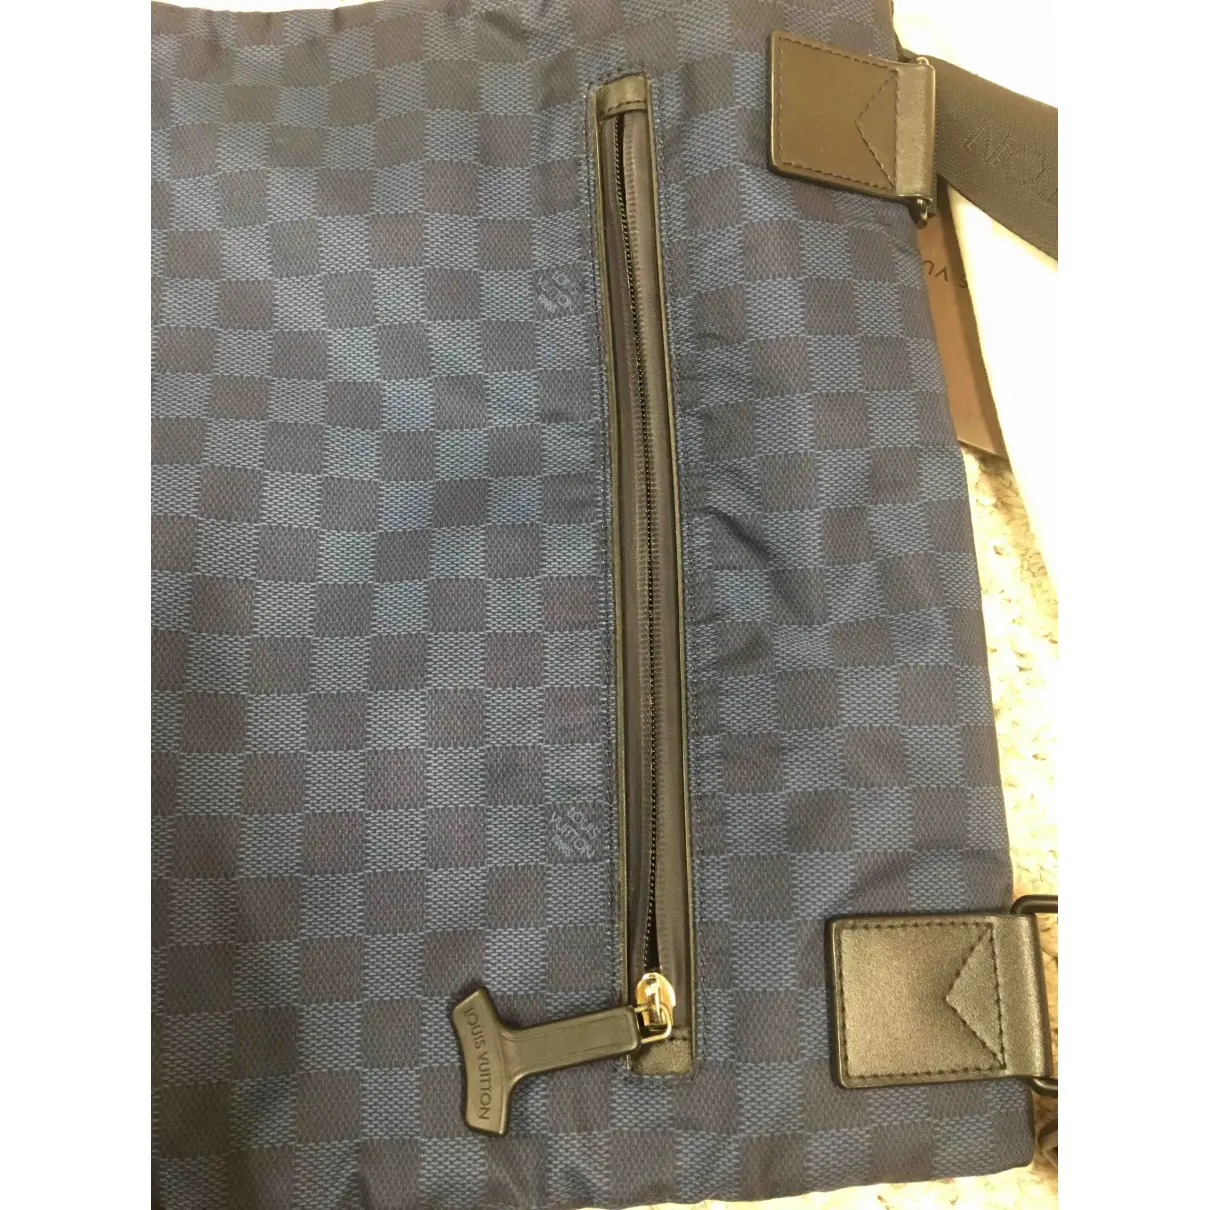 Buy Louis Vuitton Bag online